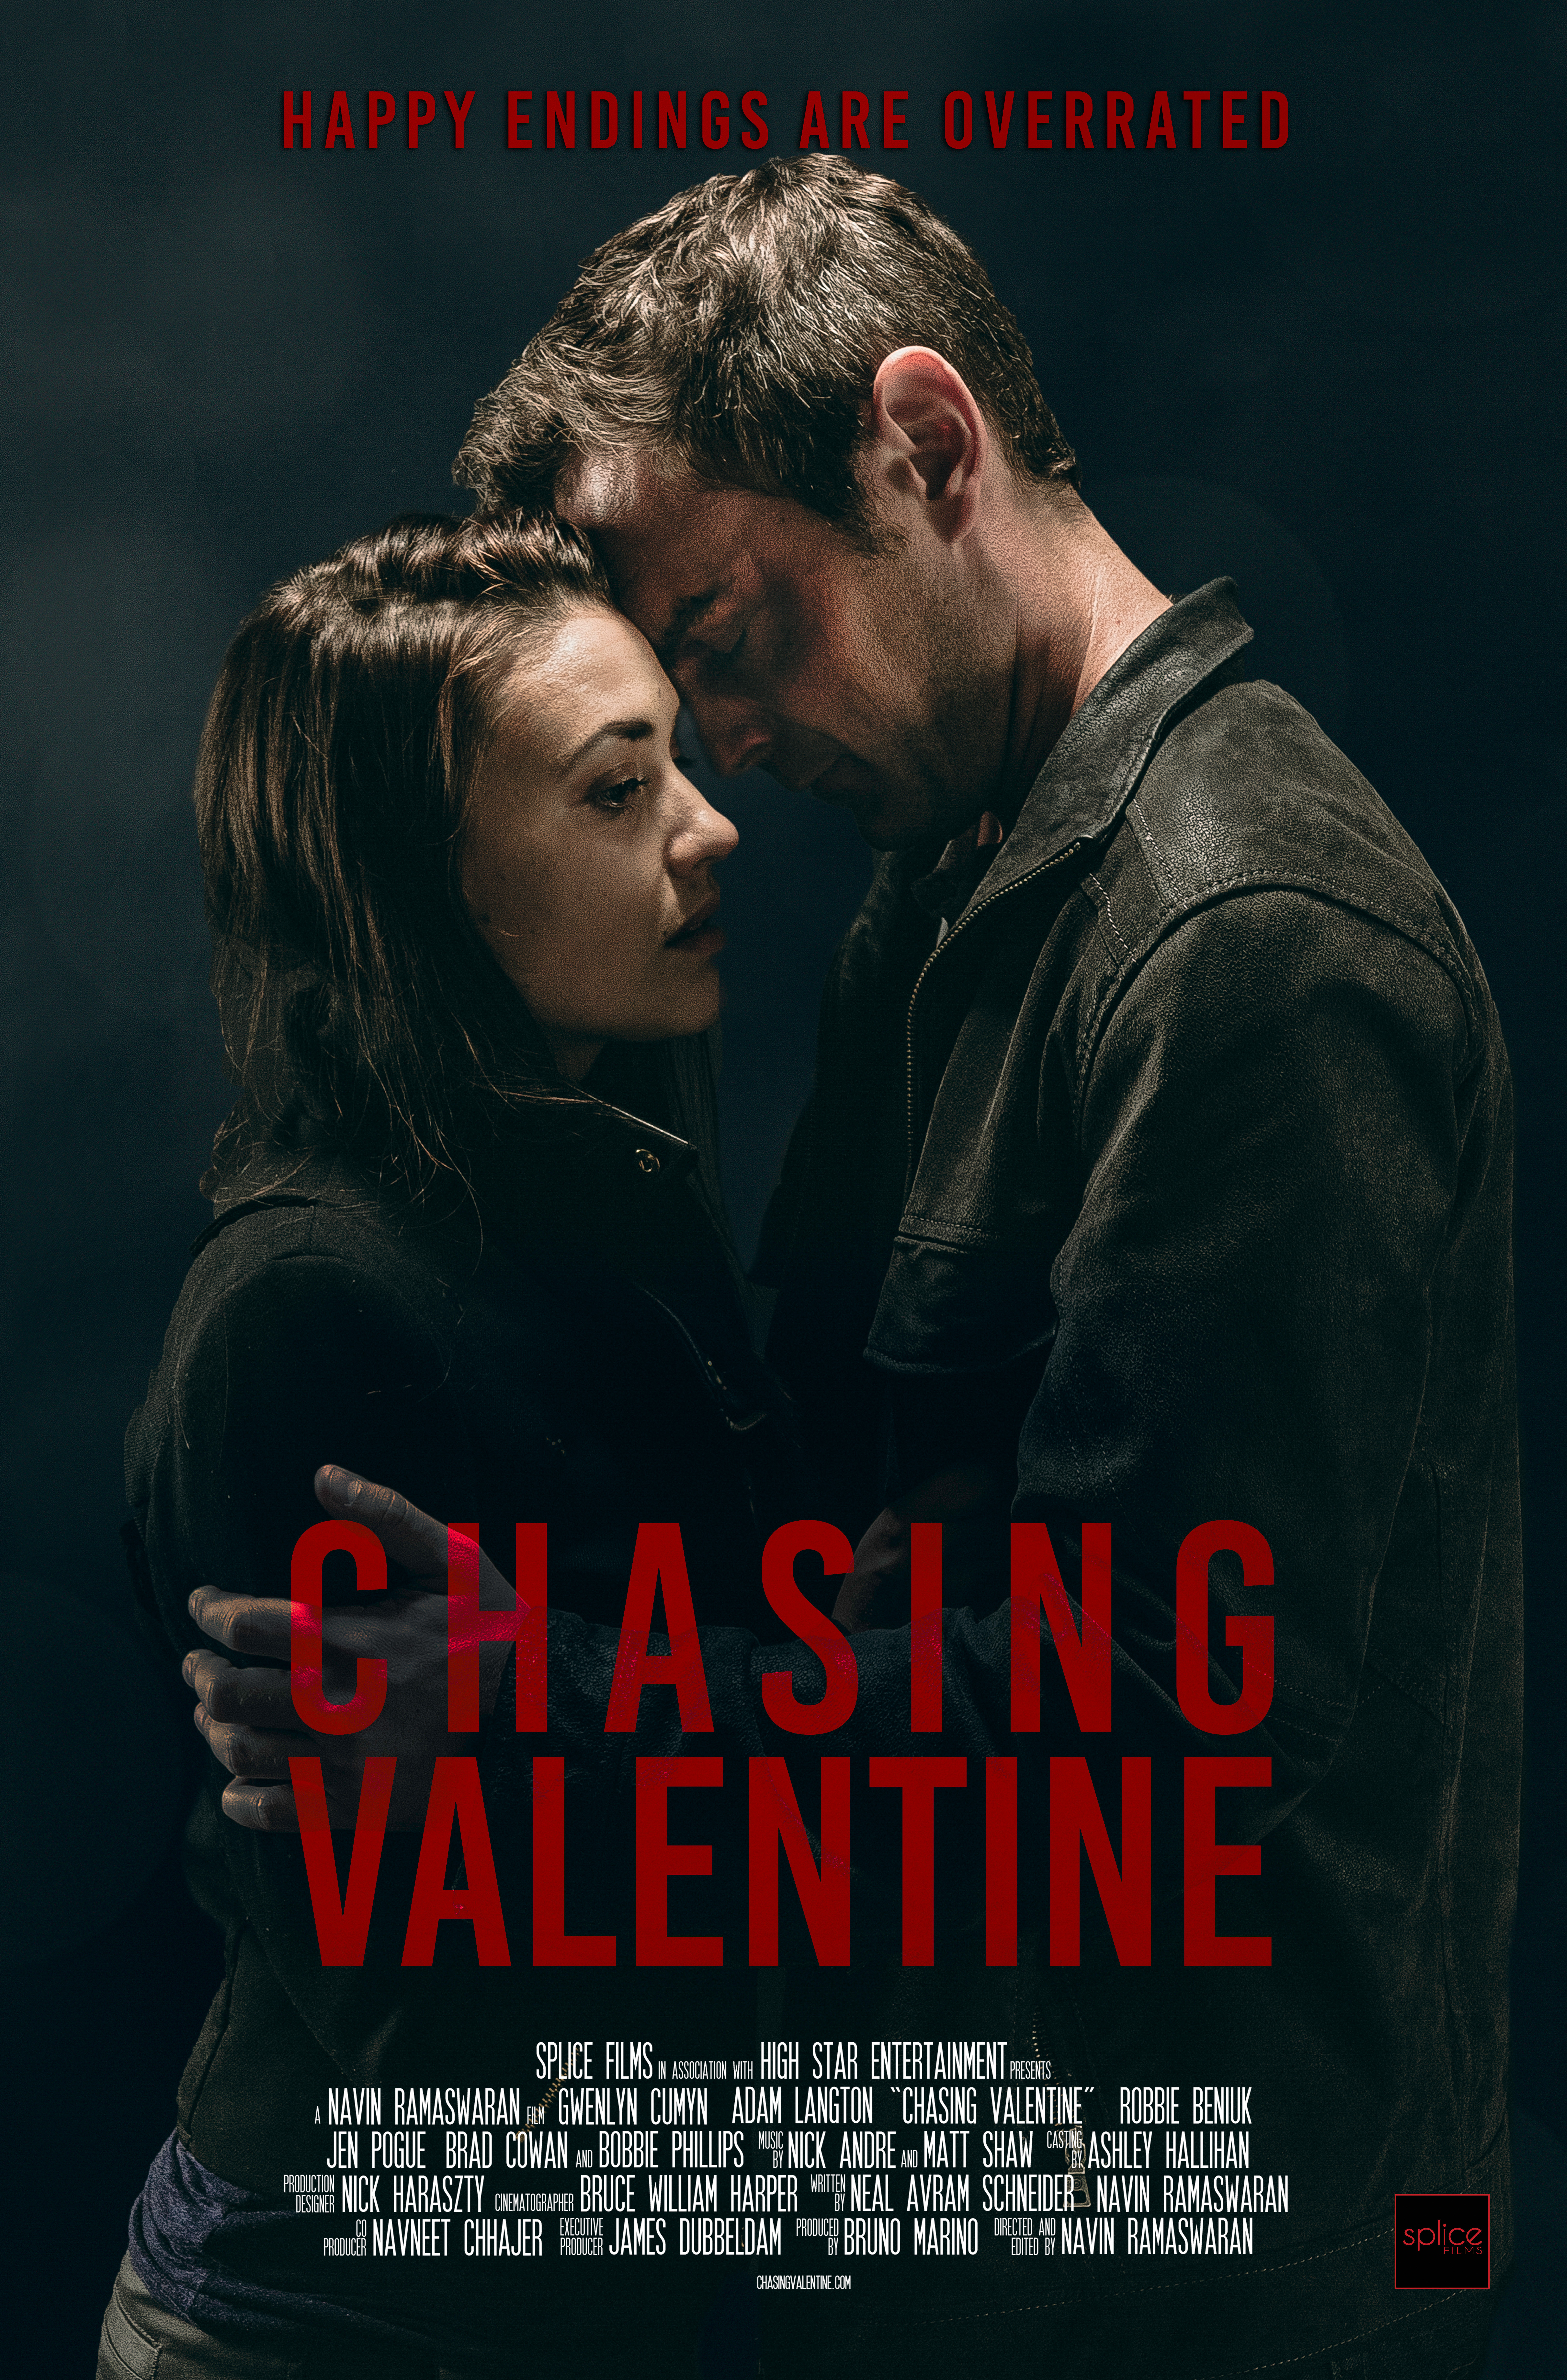 Nonton film Chasing Valentine layarkaca21 indoxx1 ganool online streaming terbaru